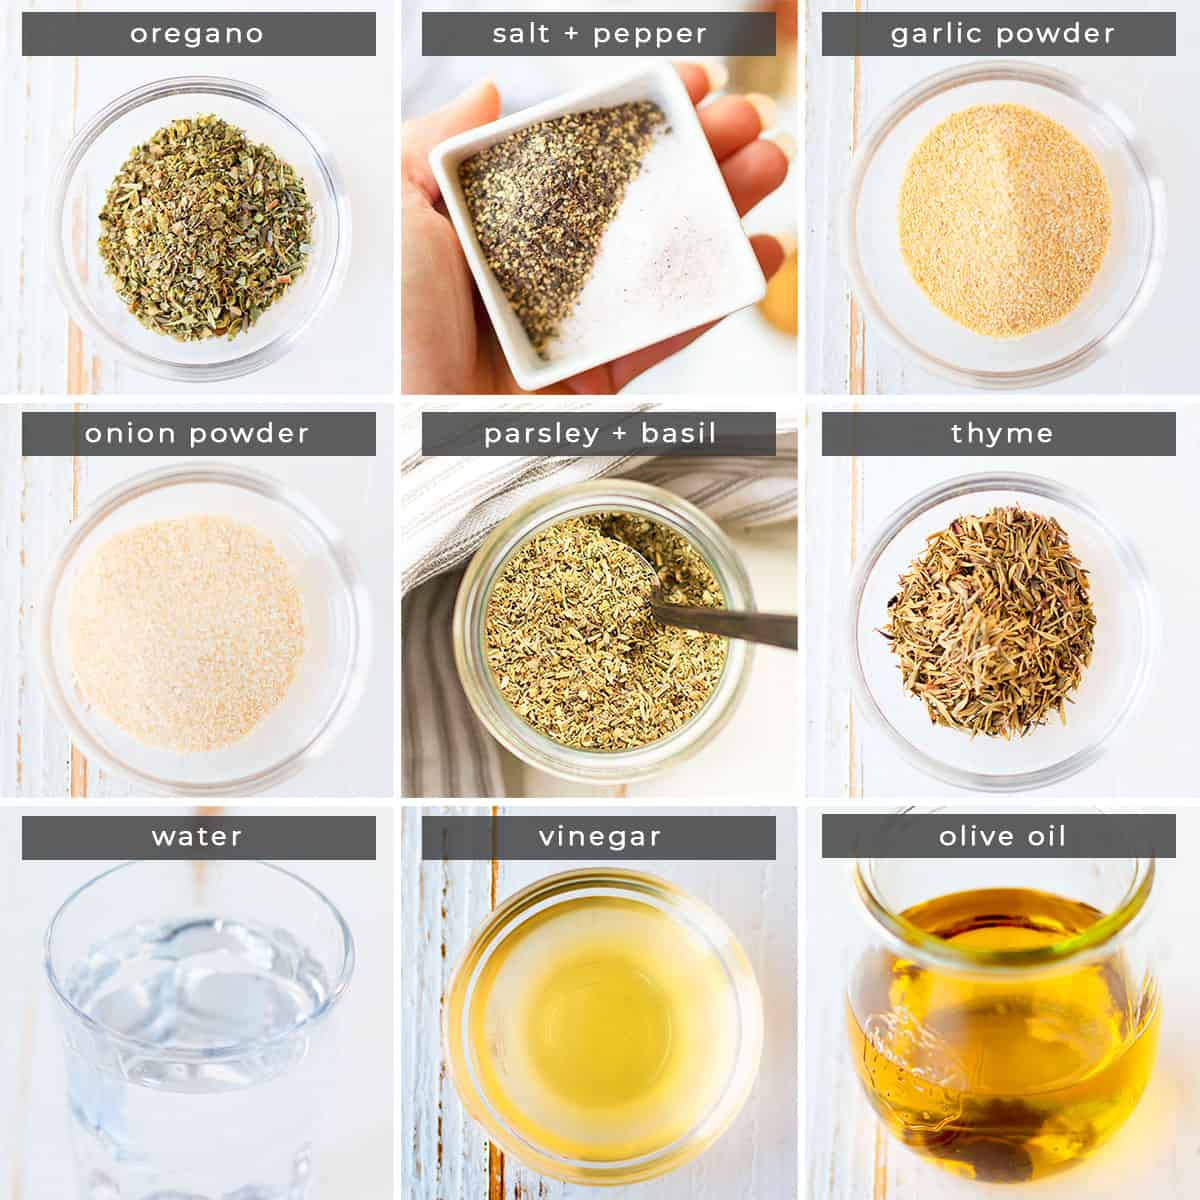 Image showing recipe ingredients oregano, salt + pepper, garlic powder, onion powder, parsley + basil, thyme, water, vinegar, and olive oil.